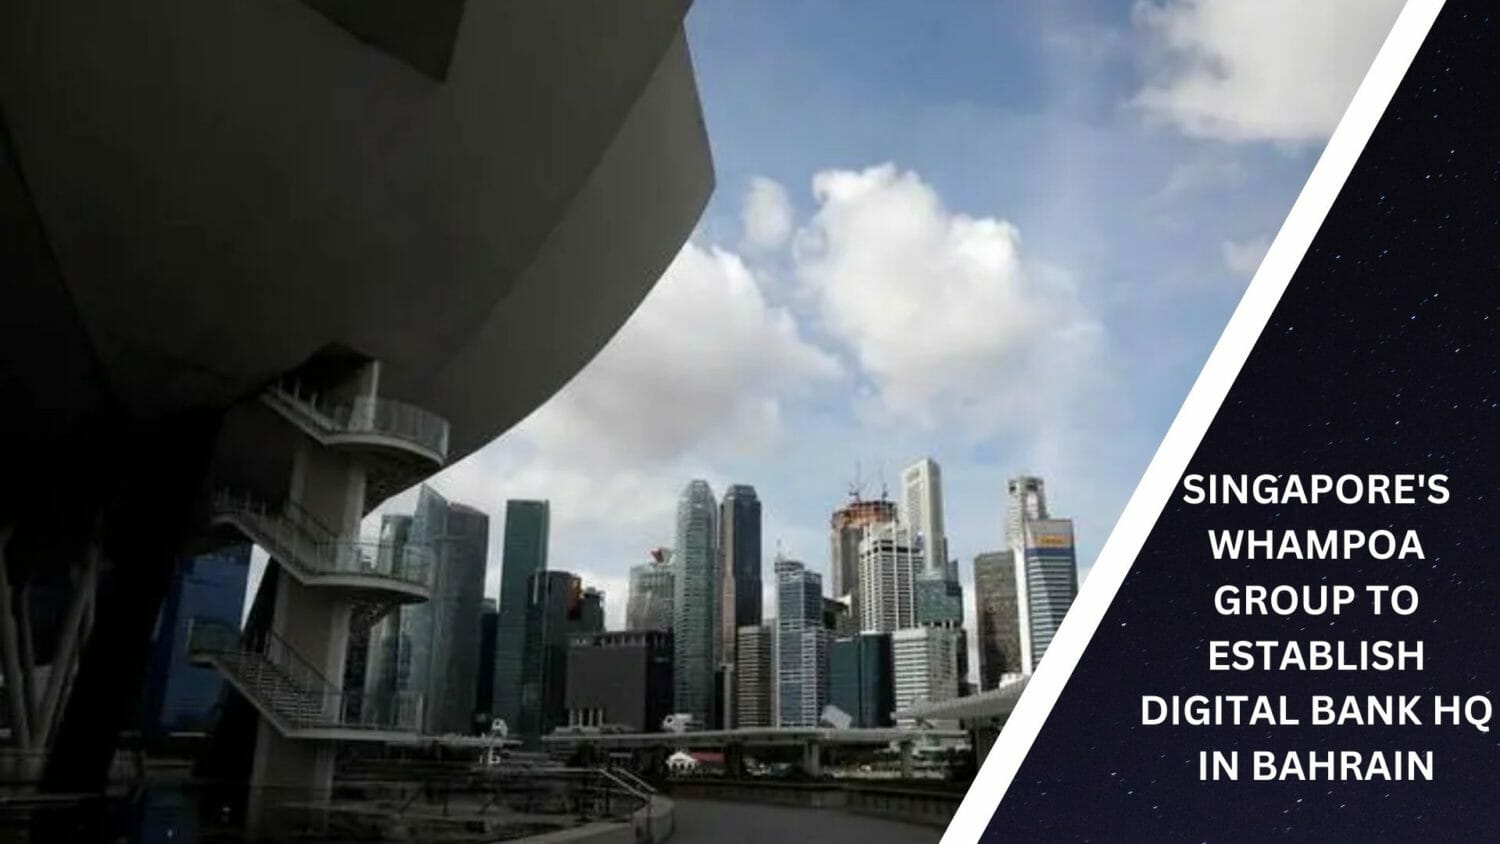 Singapore'S Whampoa Group To Establish Digital Bank Hq In Bahrain